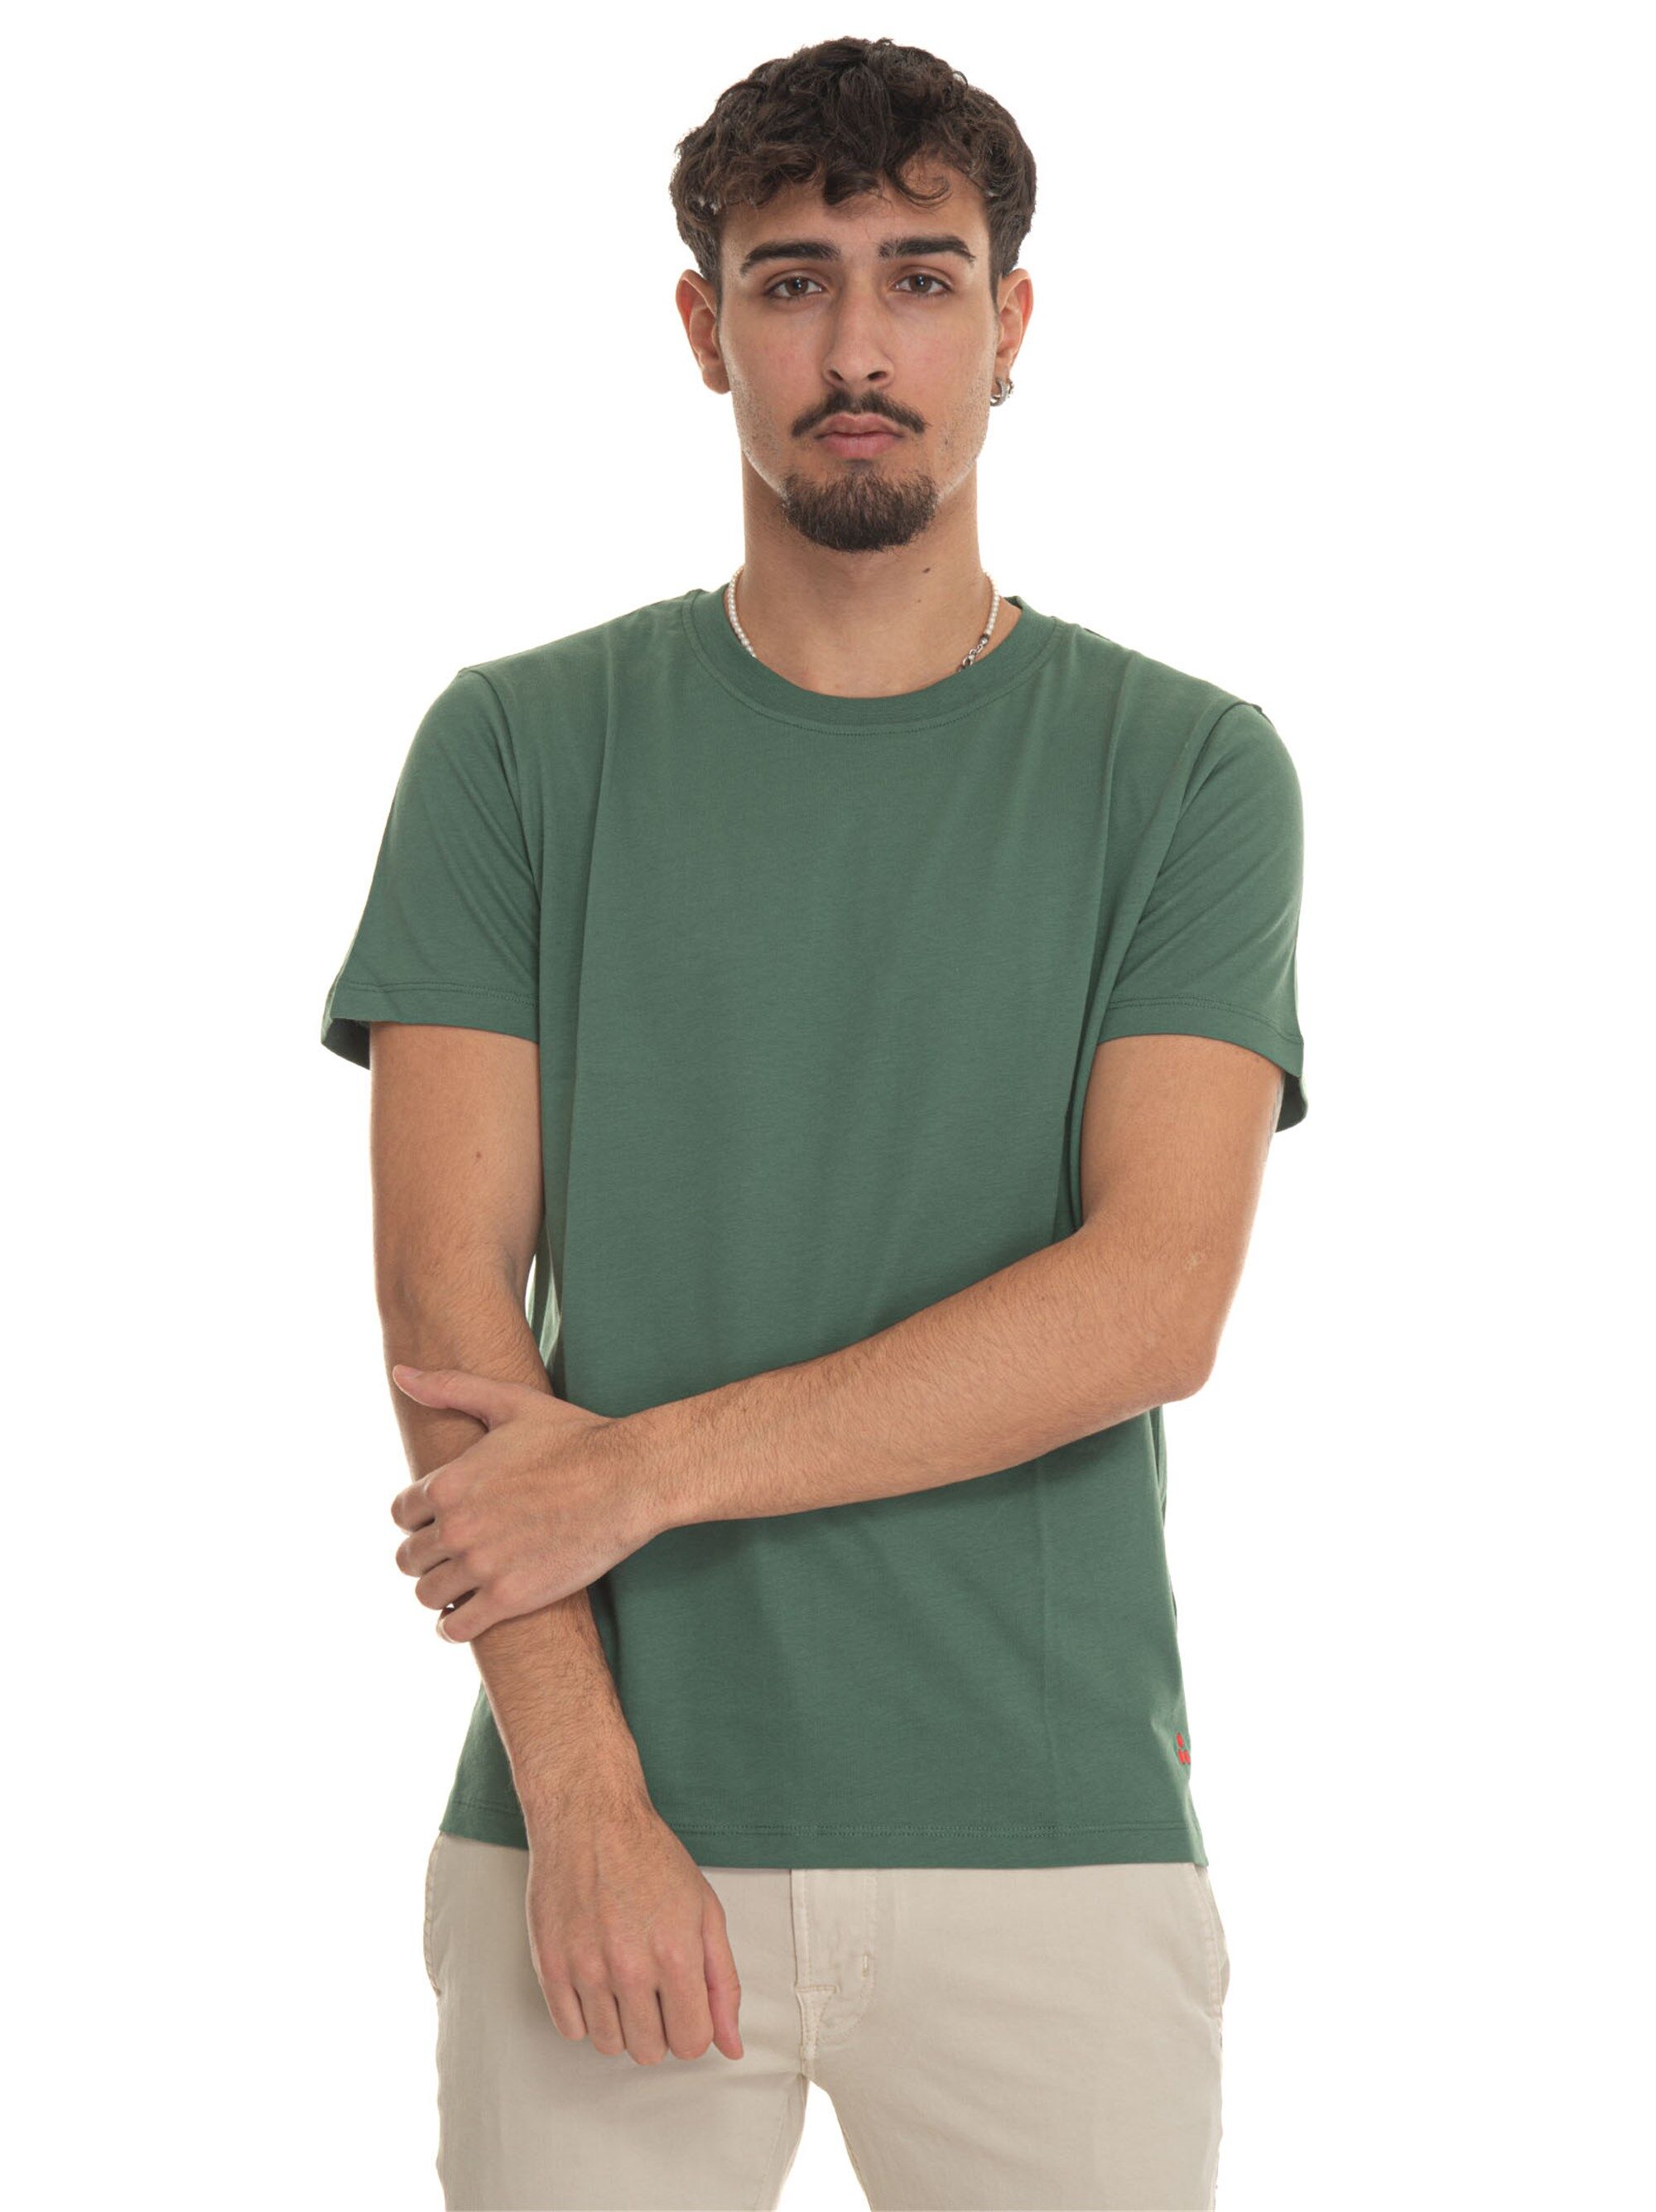 Peuterey T-shirt girocollo mezza manica MANDERLY01 Verde militare Uomo XL